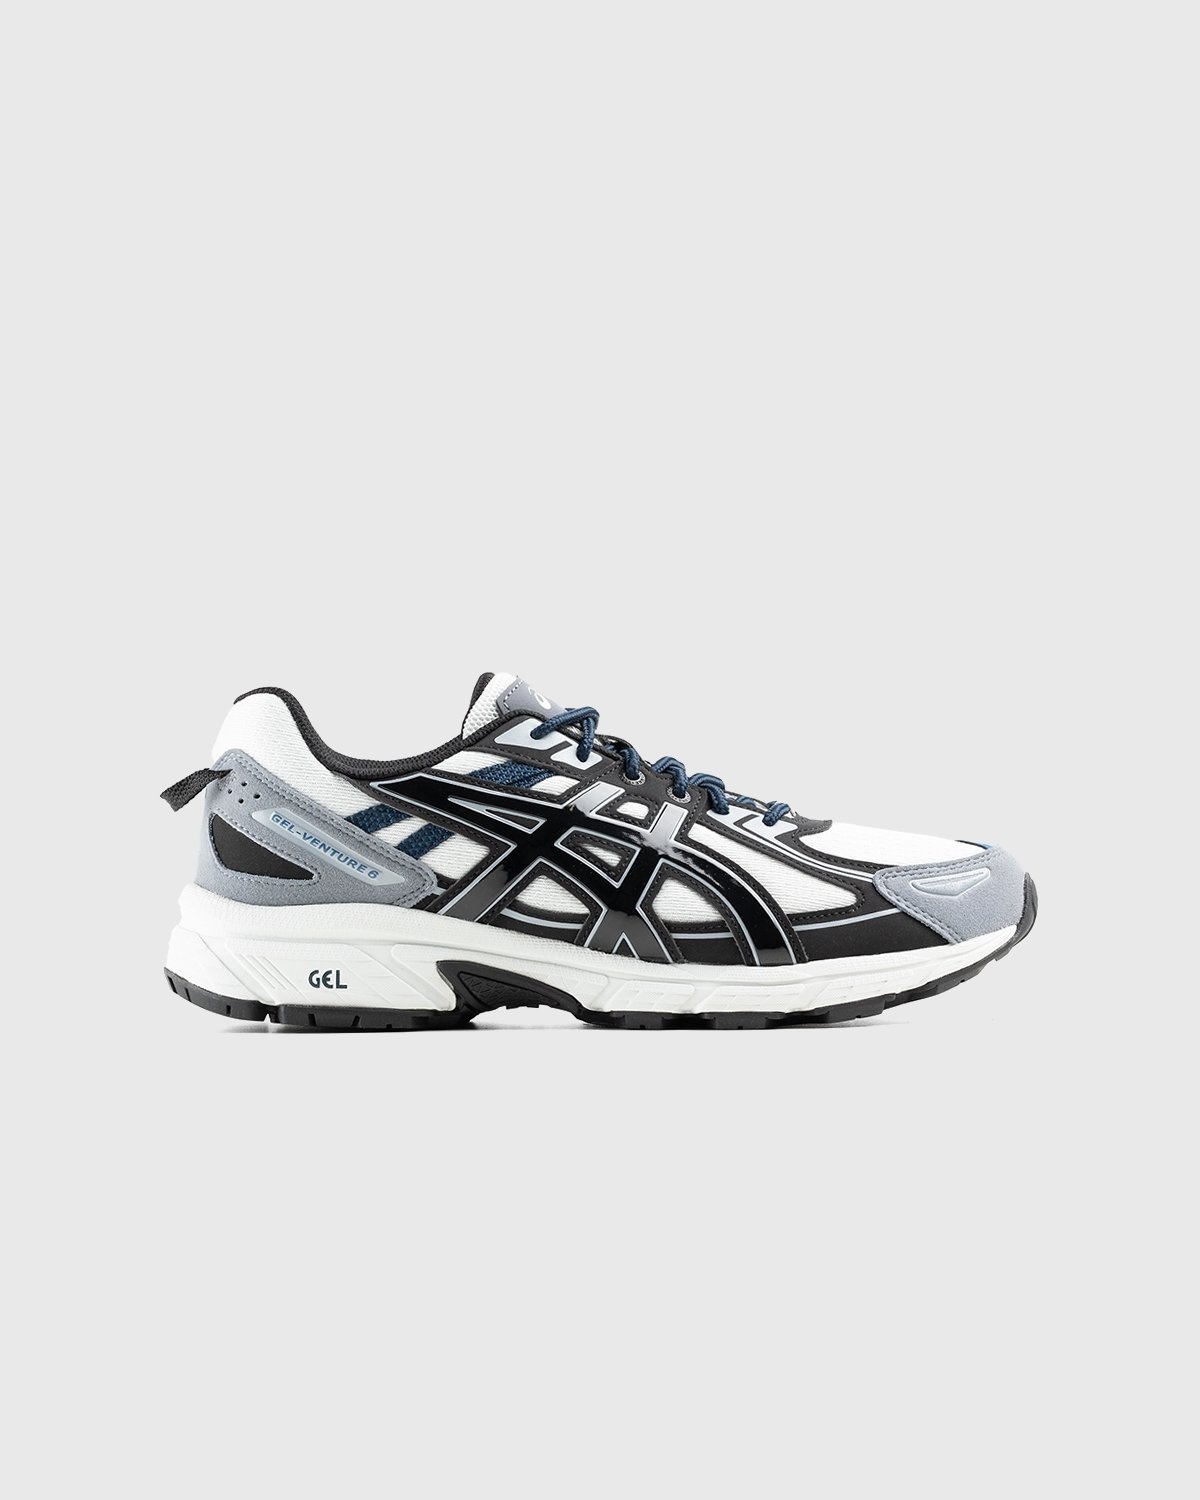 asics – Gel-Venture 6 Glacier Grey Black - Low Top Sneakers - Grey - Image 1